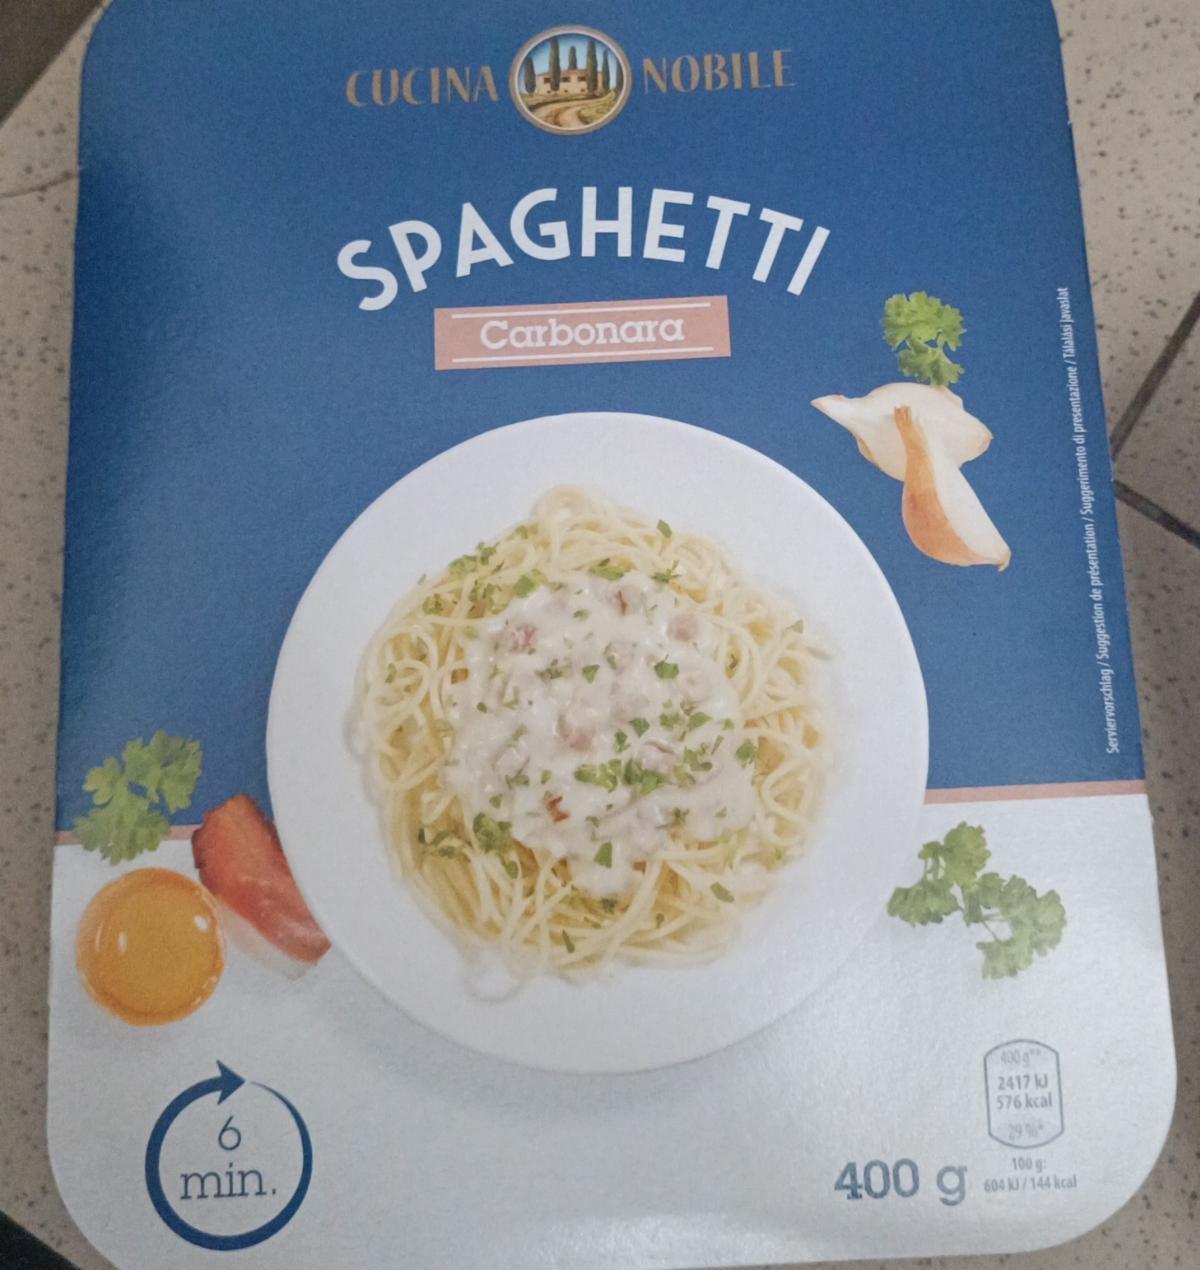 Képek - Spagetti carbonara Cucina nobile